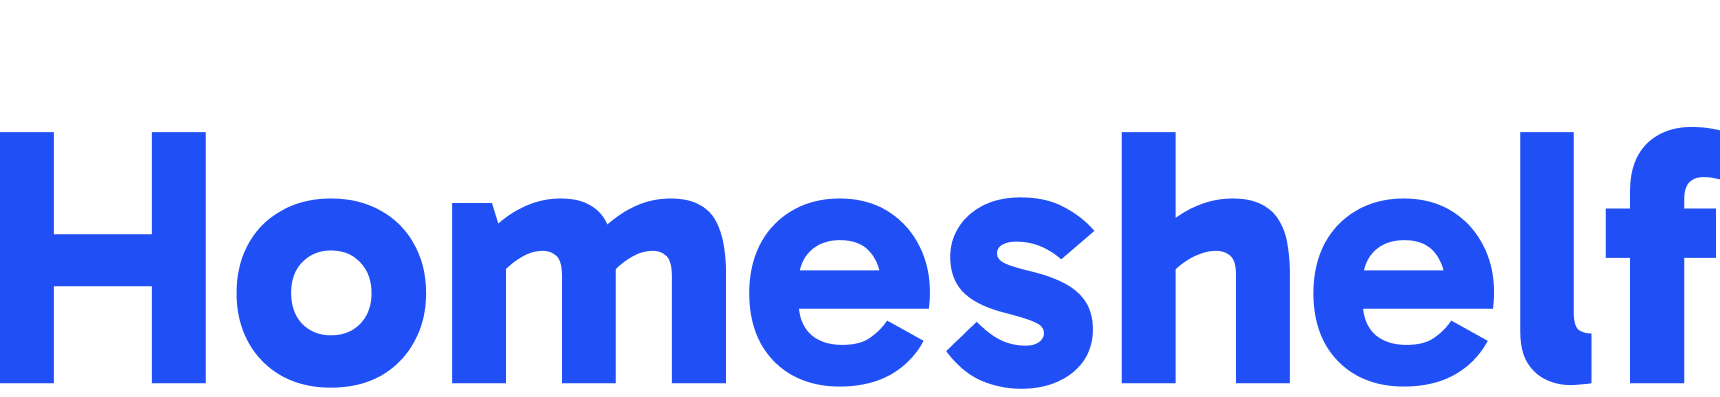 Homeshelf logo